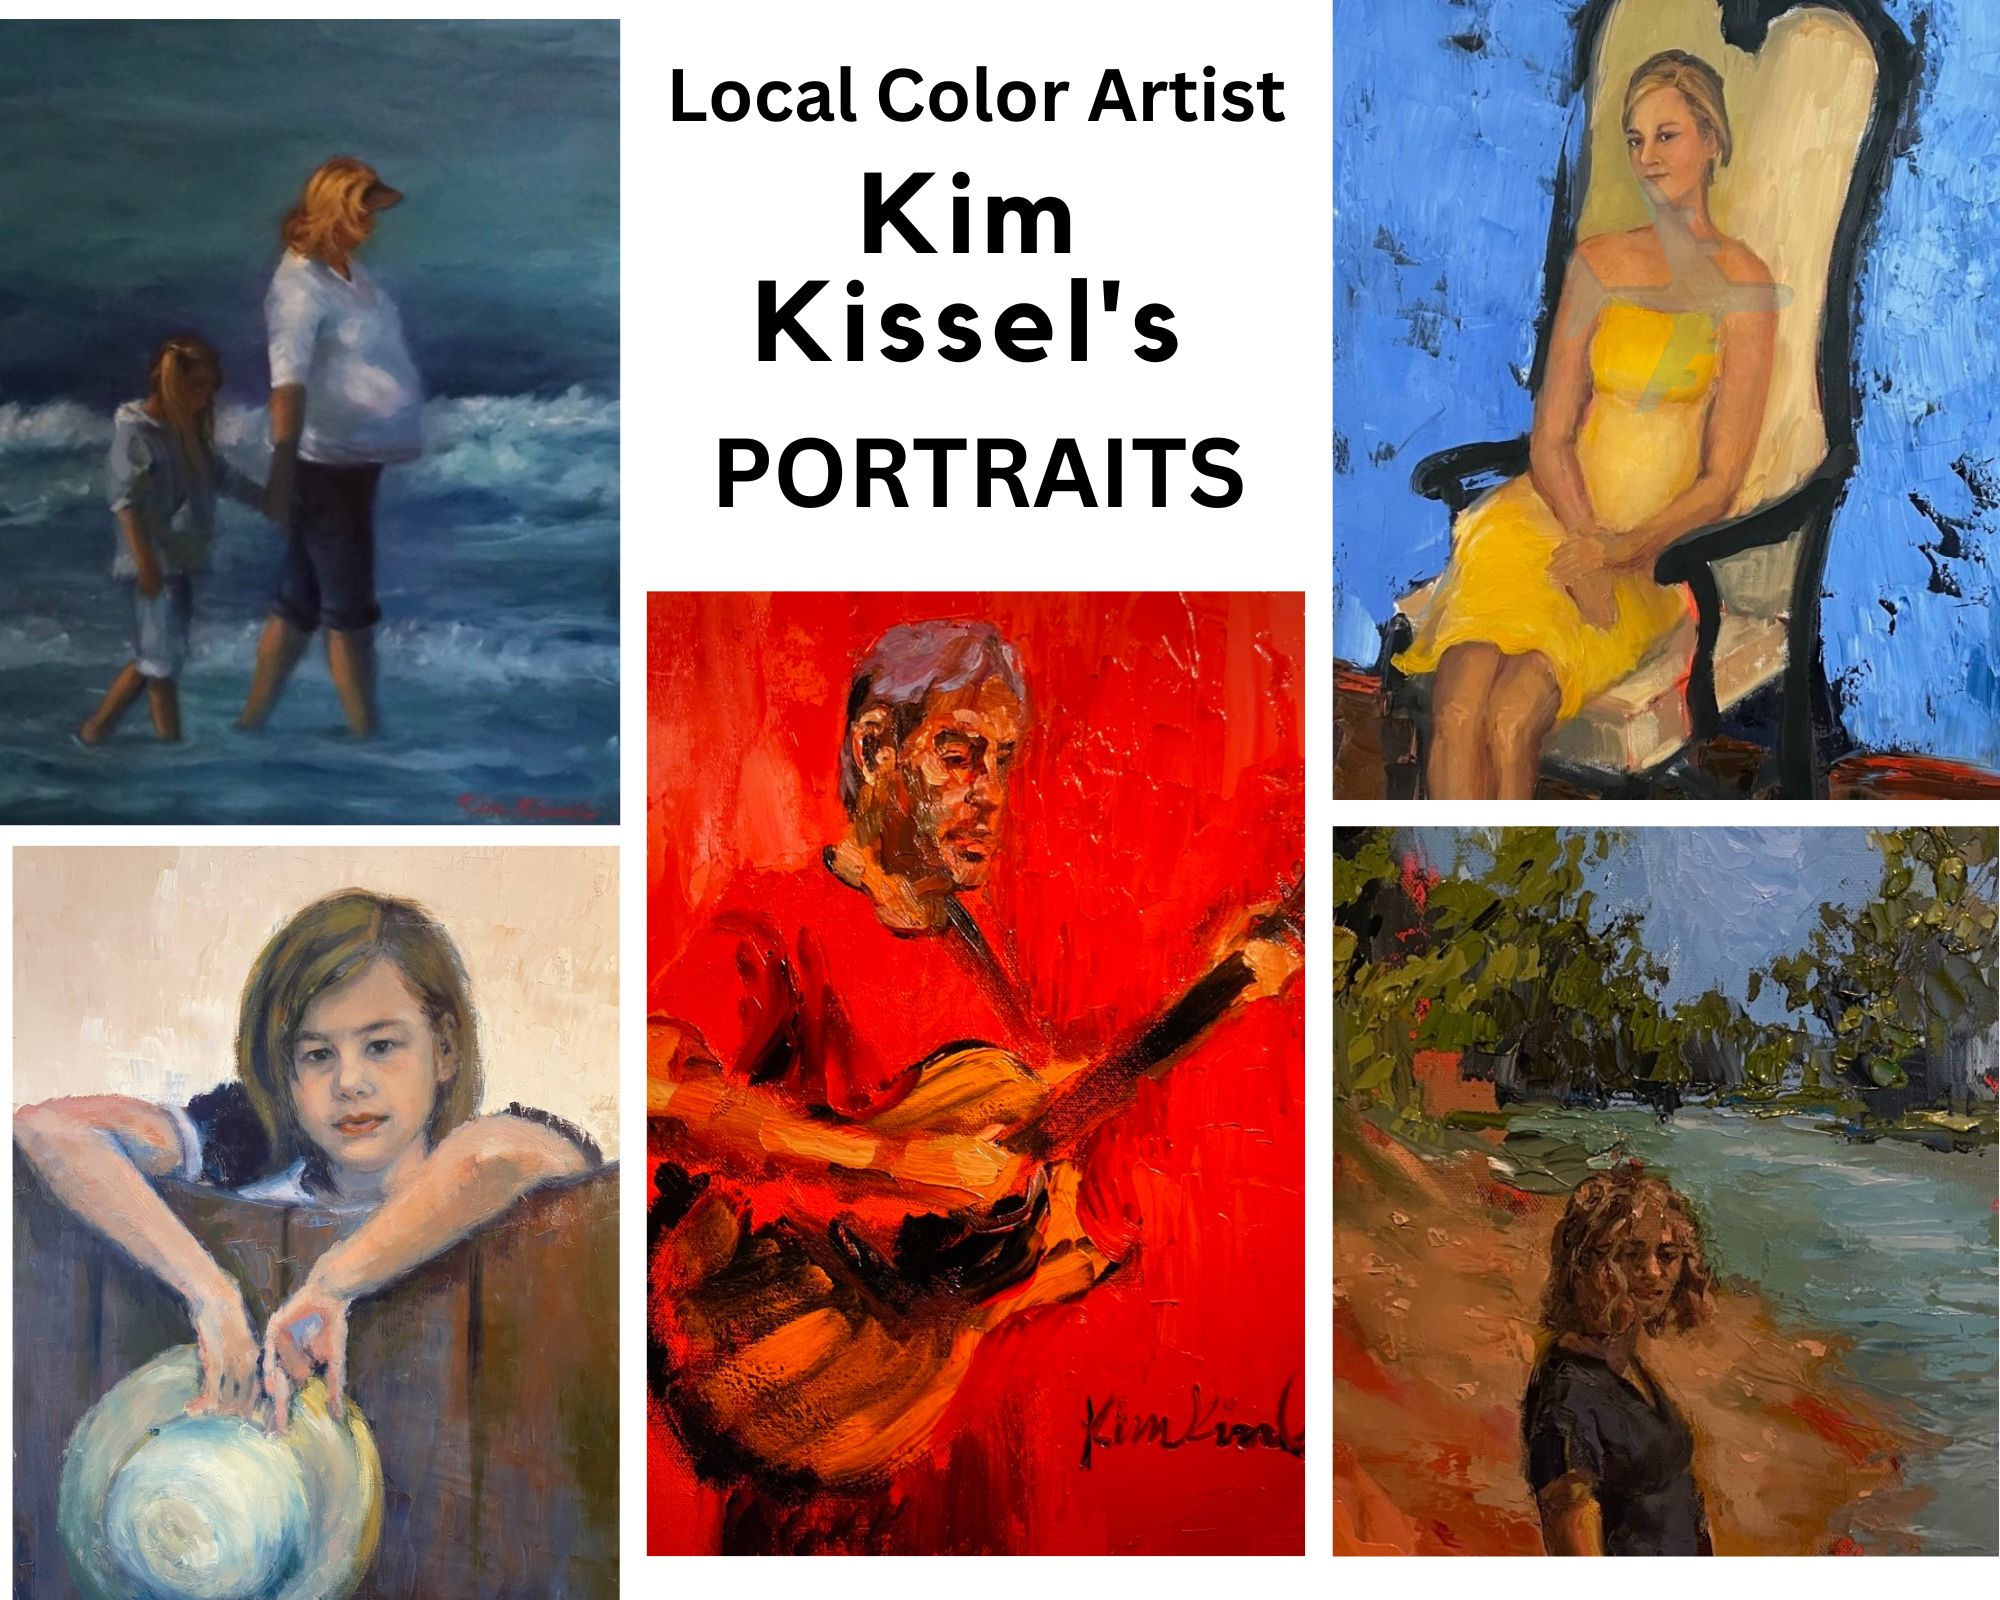 Kim Kissel's Portraits